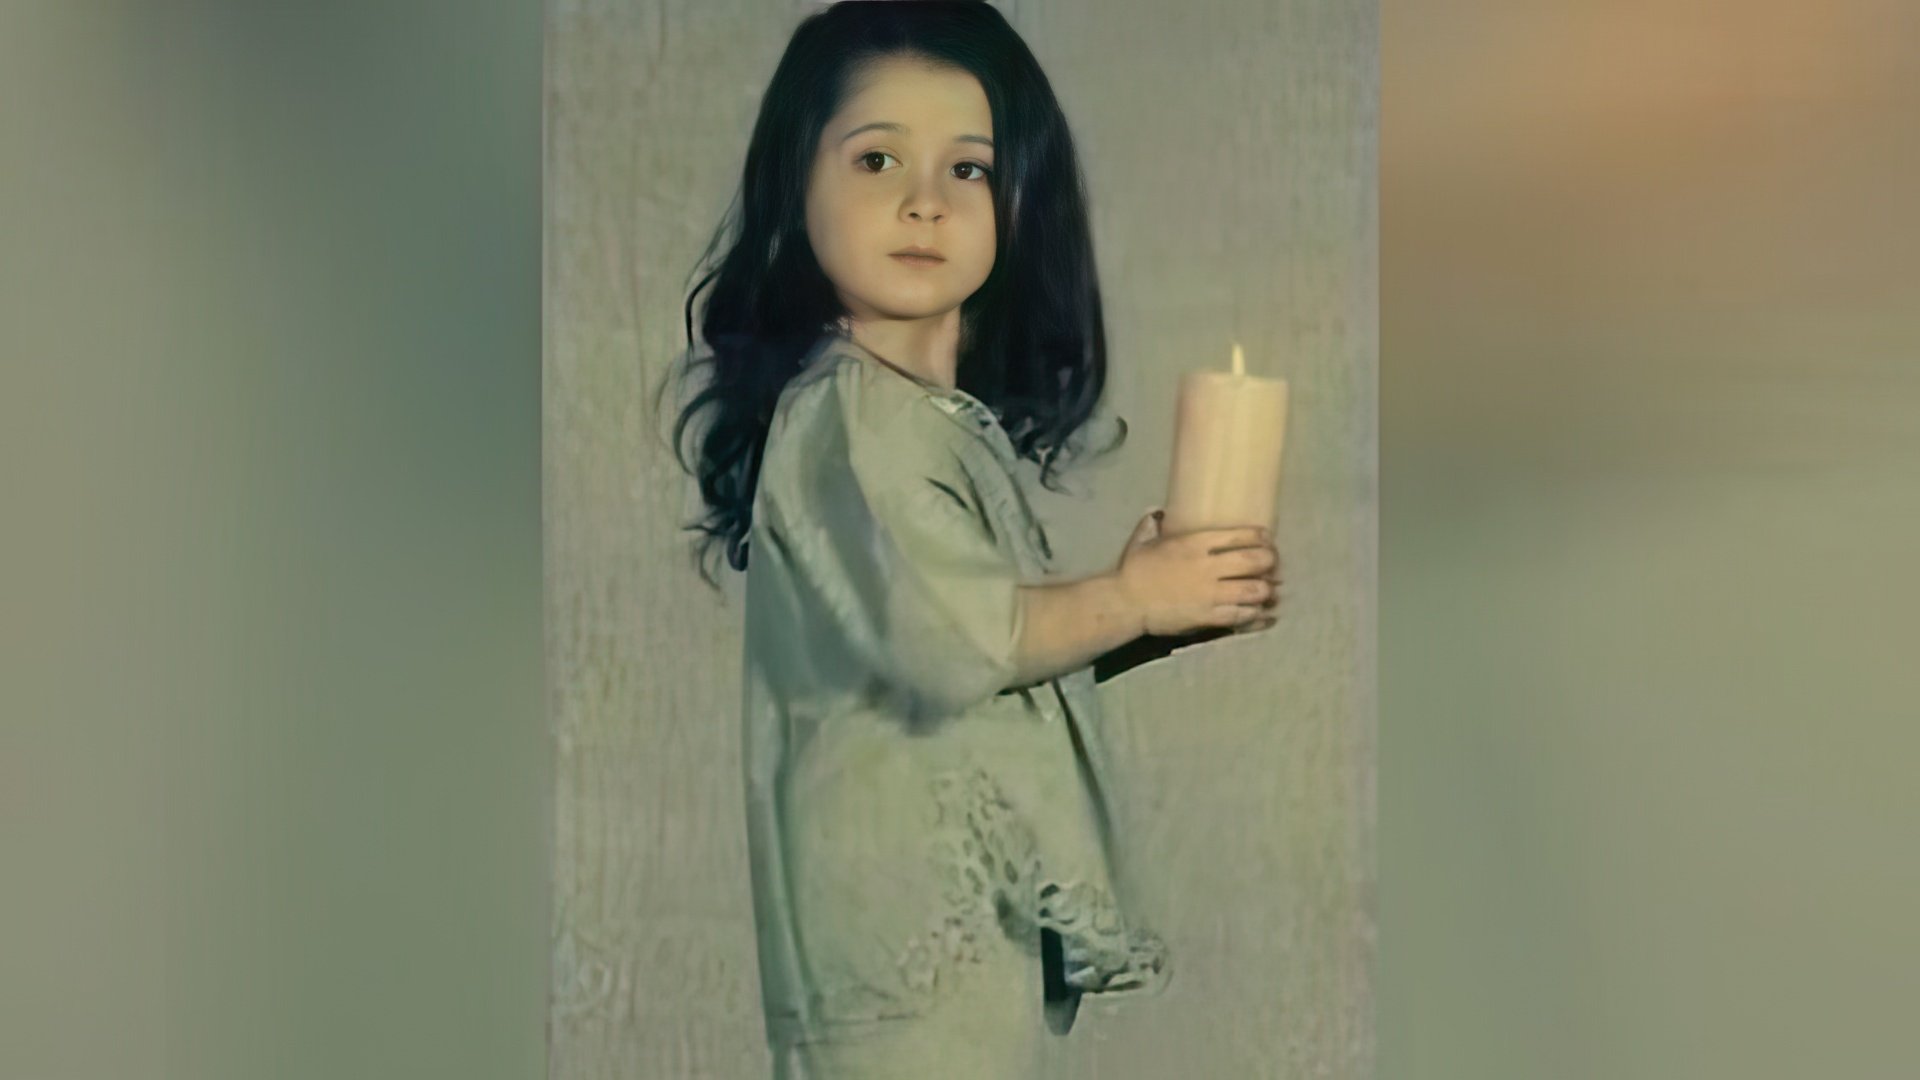 Lara Fabian's childhood photo